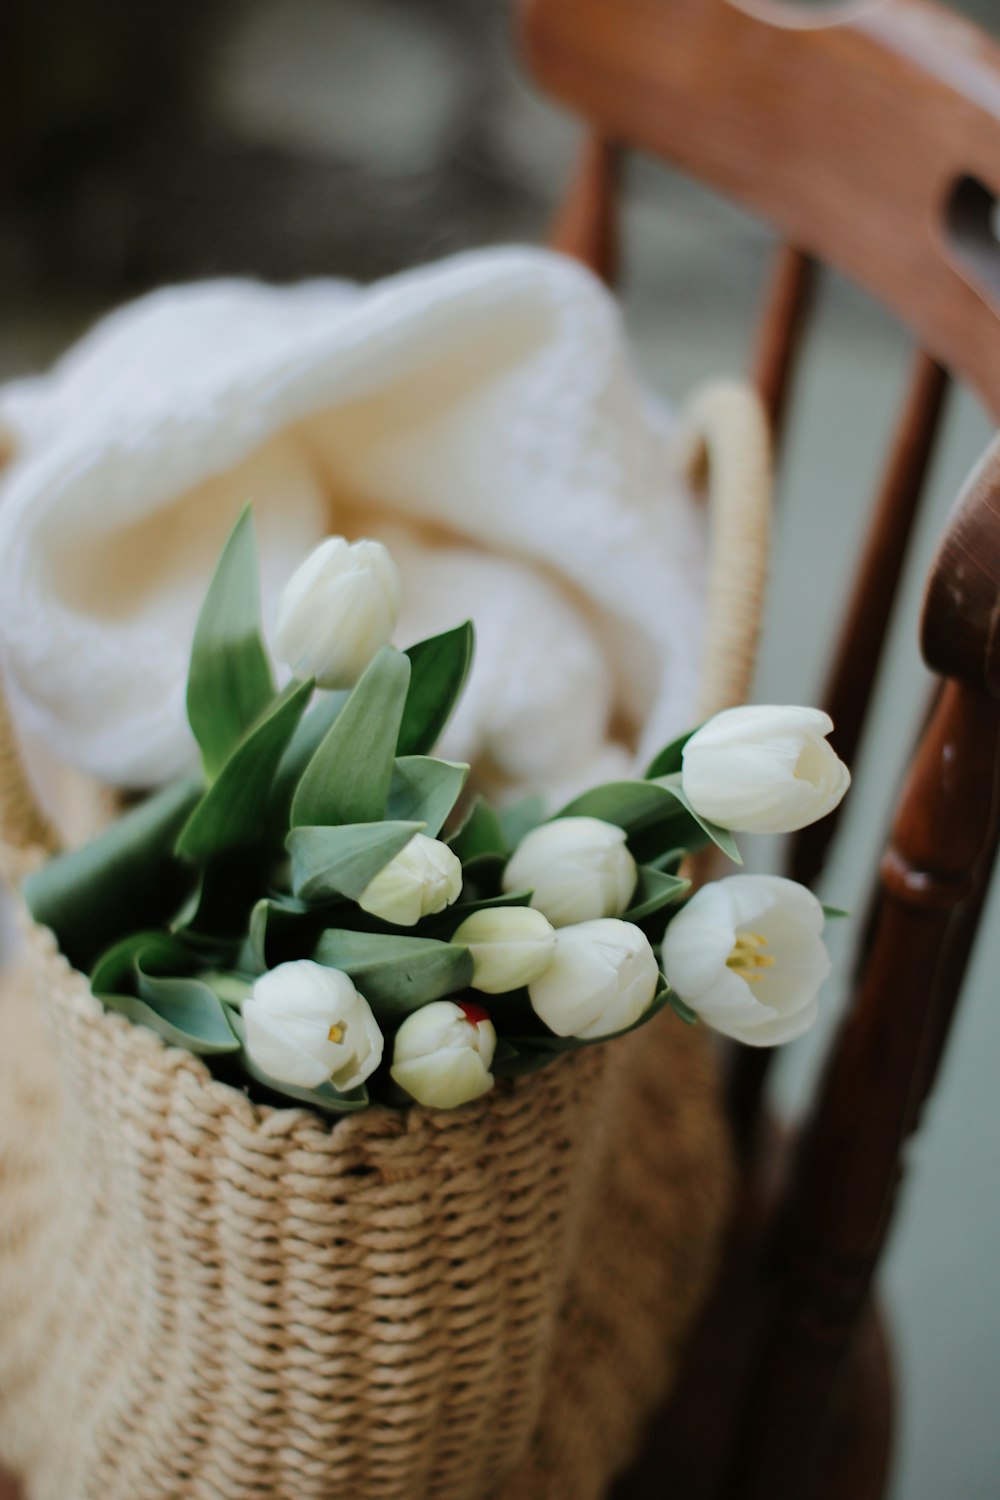 white flowers on brown woven basket photo – Free Ischia Image on Unsplash